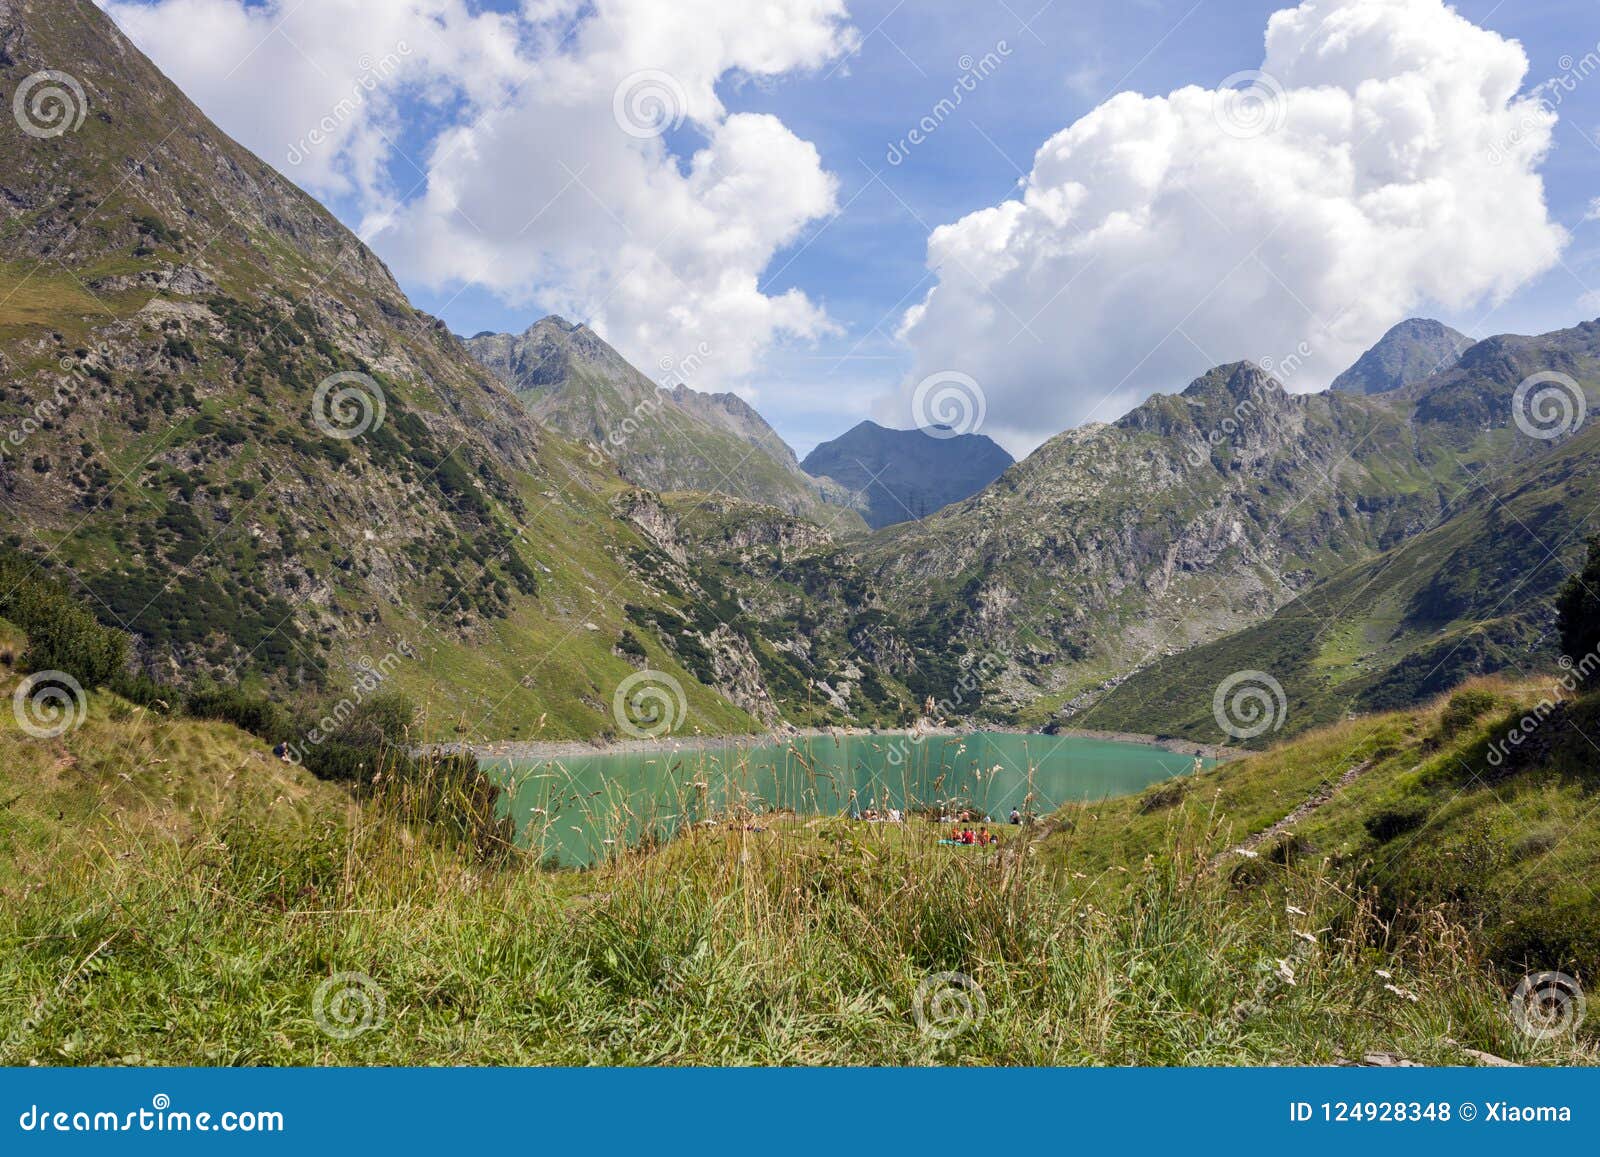 a view of barbellino artificial lake, valbondione,